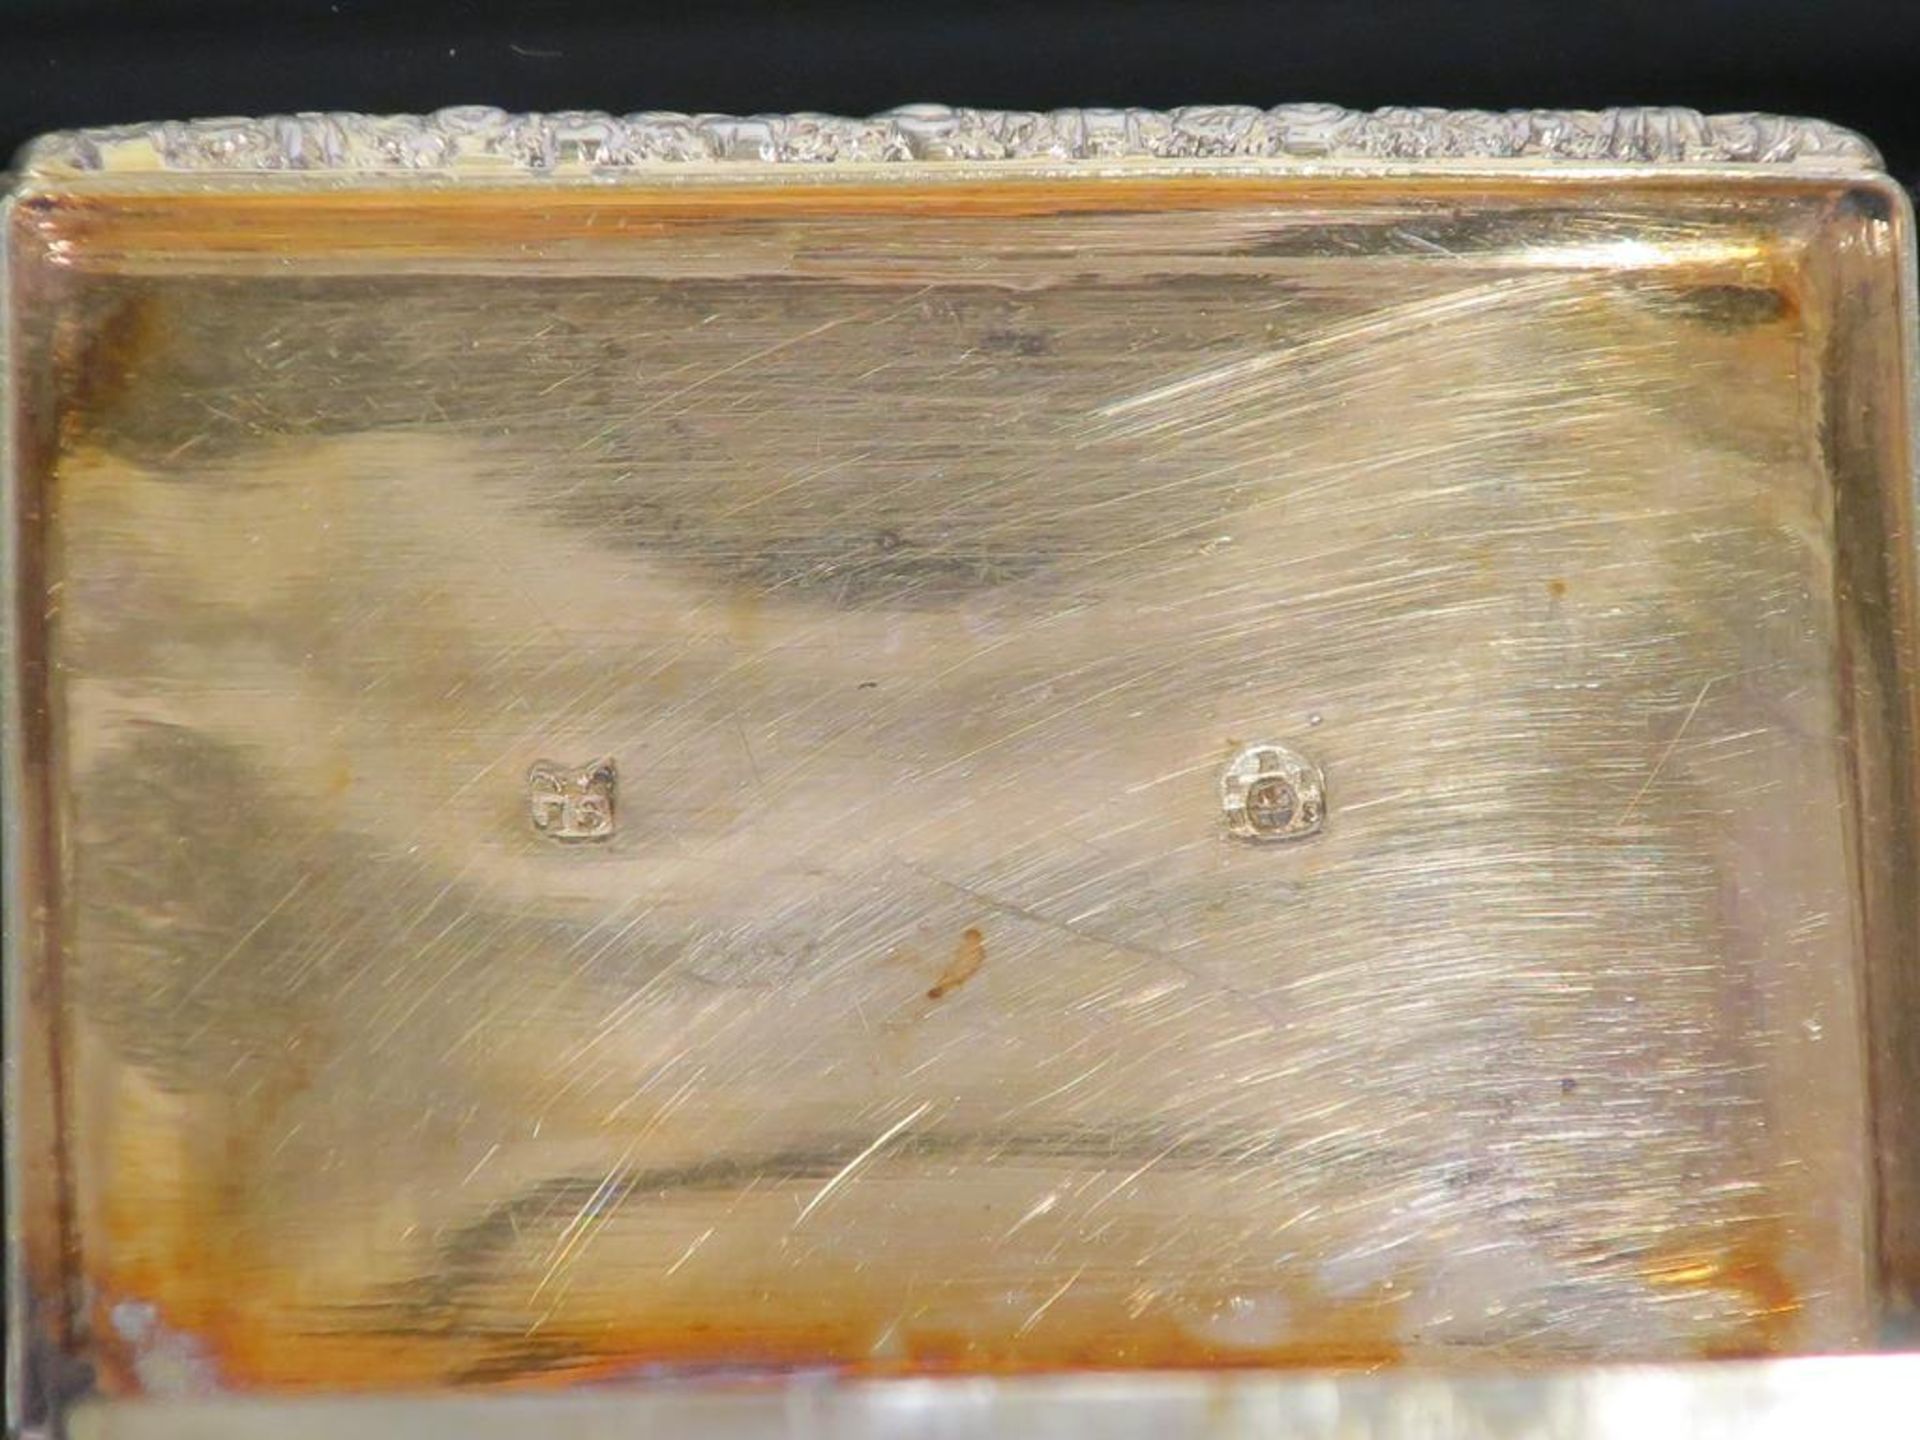 An Austro Hungarian Silver Snuff Box (Prague Assay Marks) (est £150-£300) - Image 3 of 3